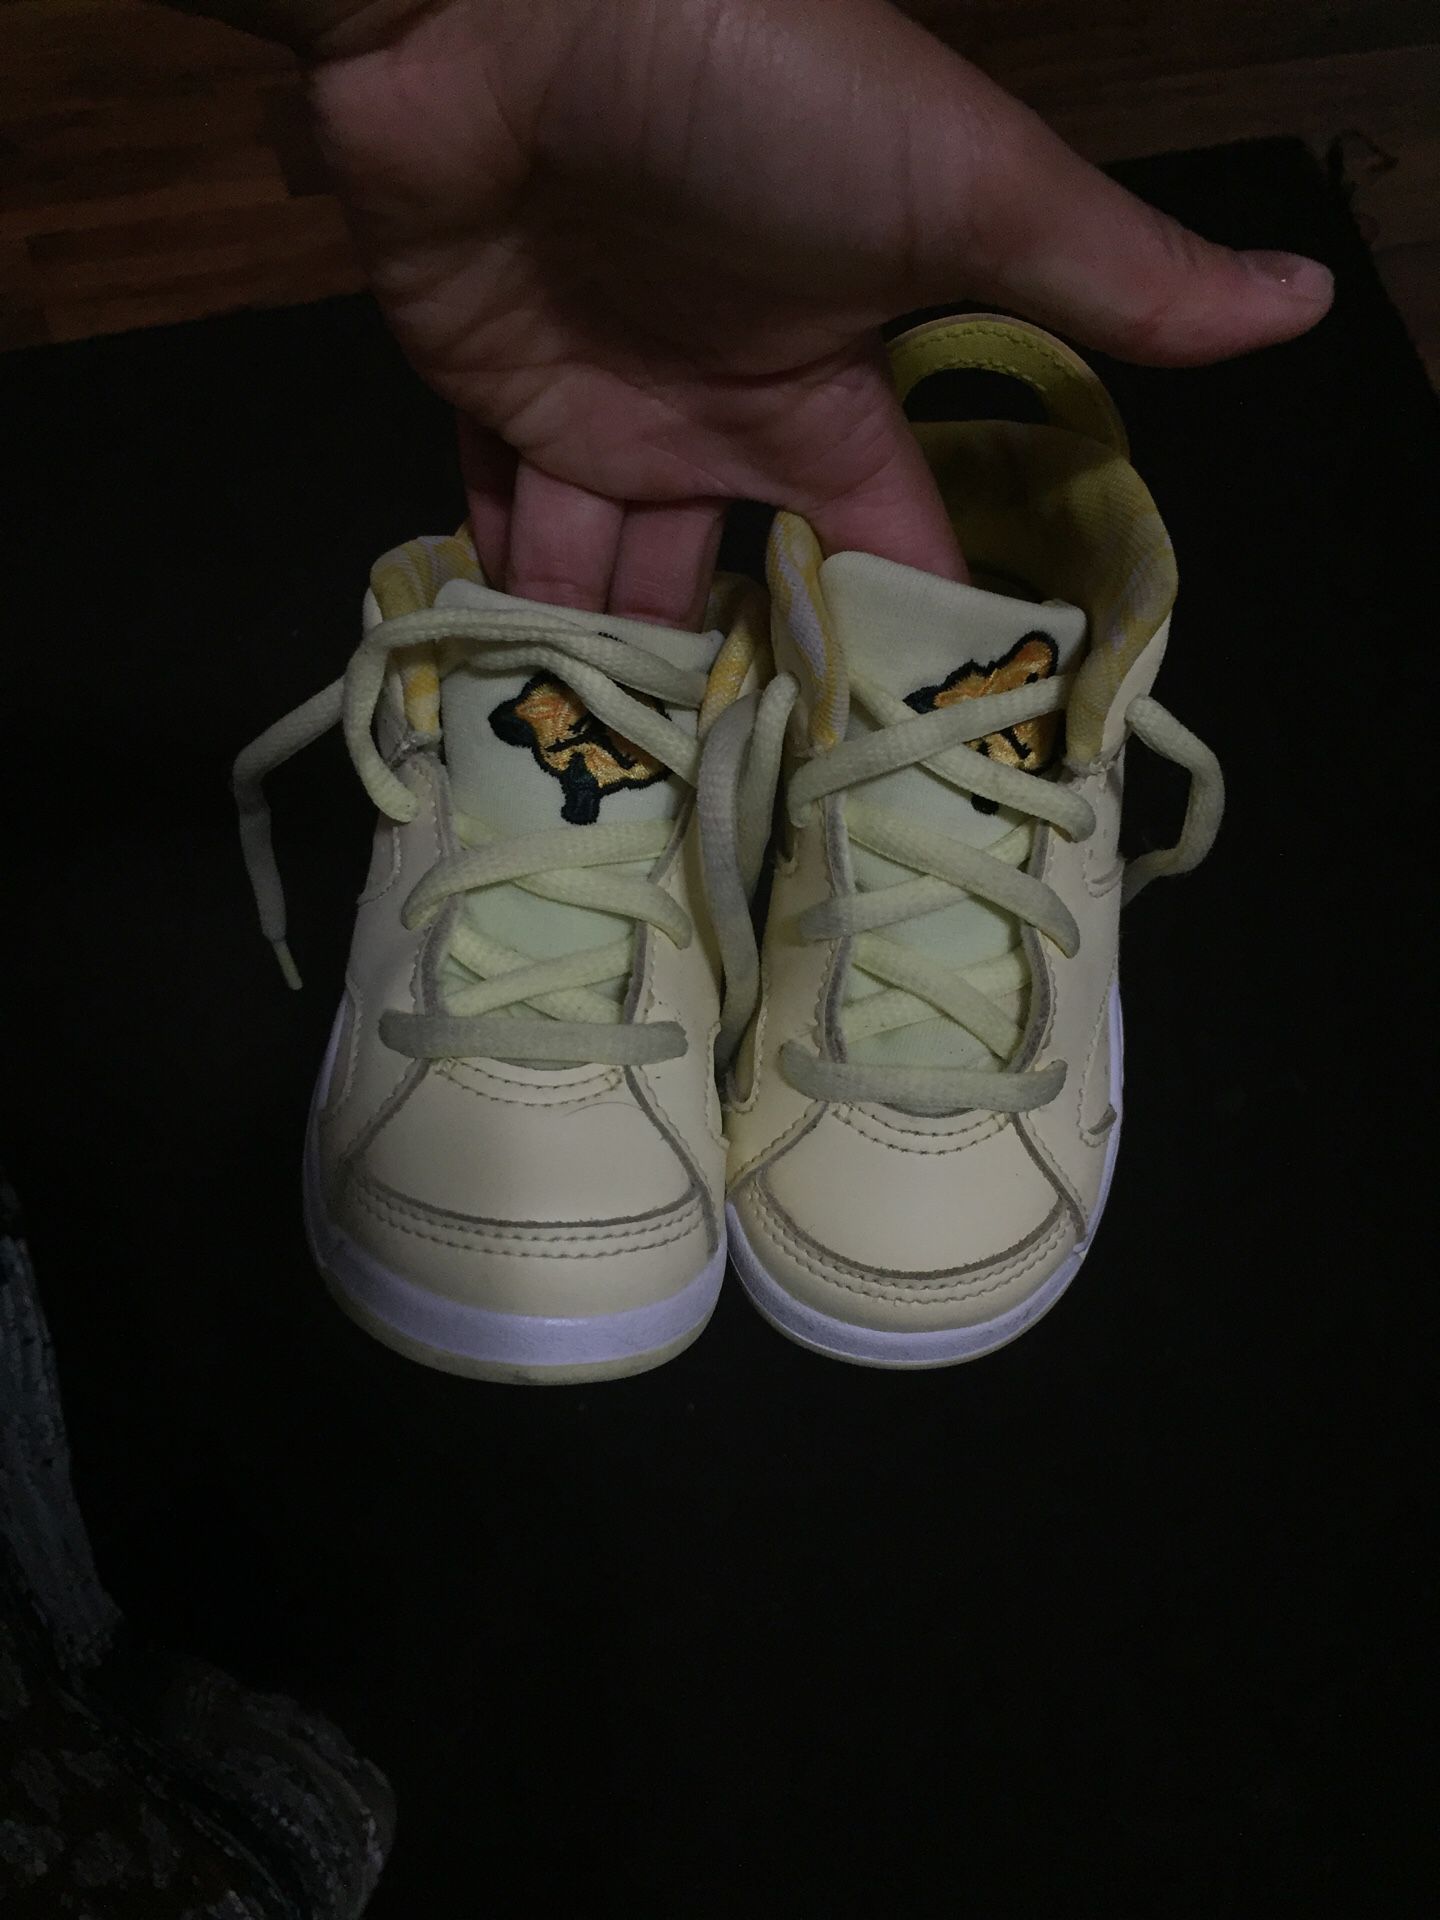 Toddler Jordan shoes and under armor onesie